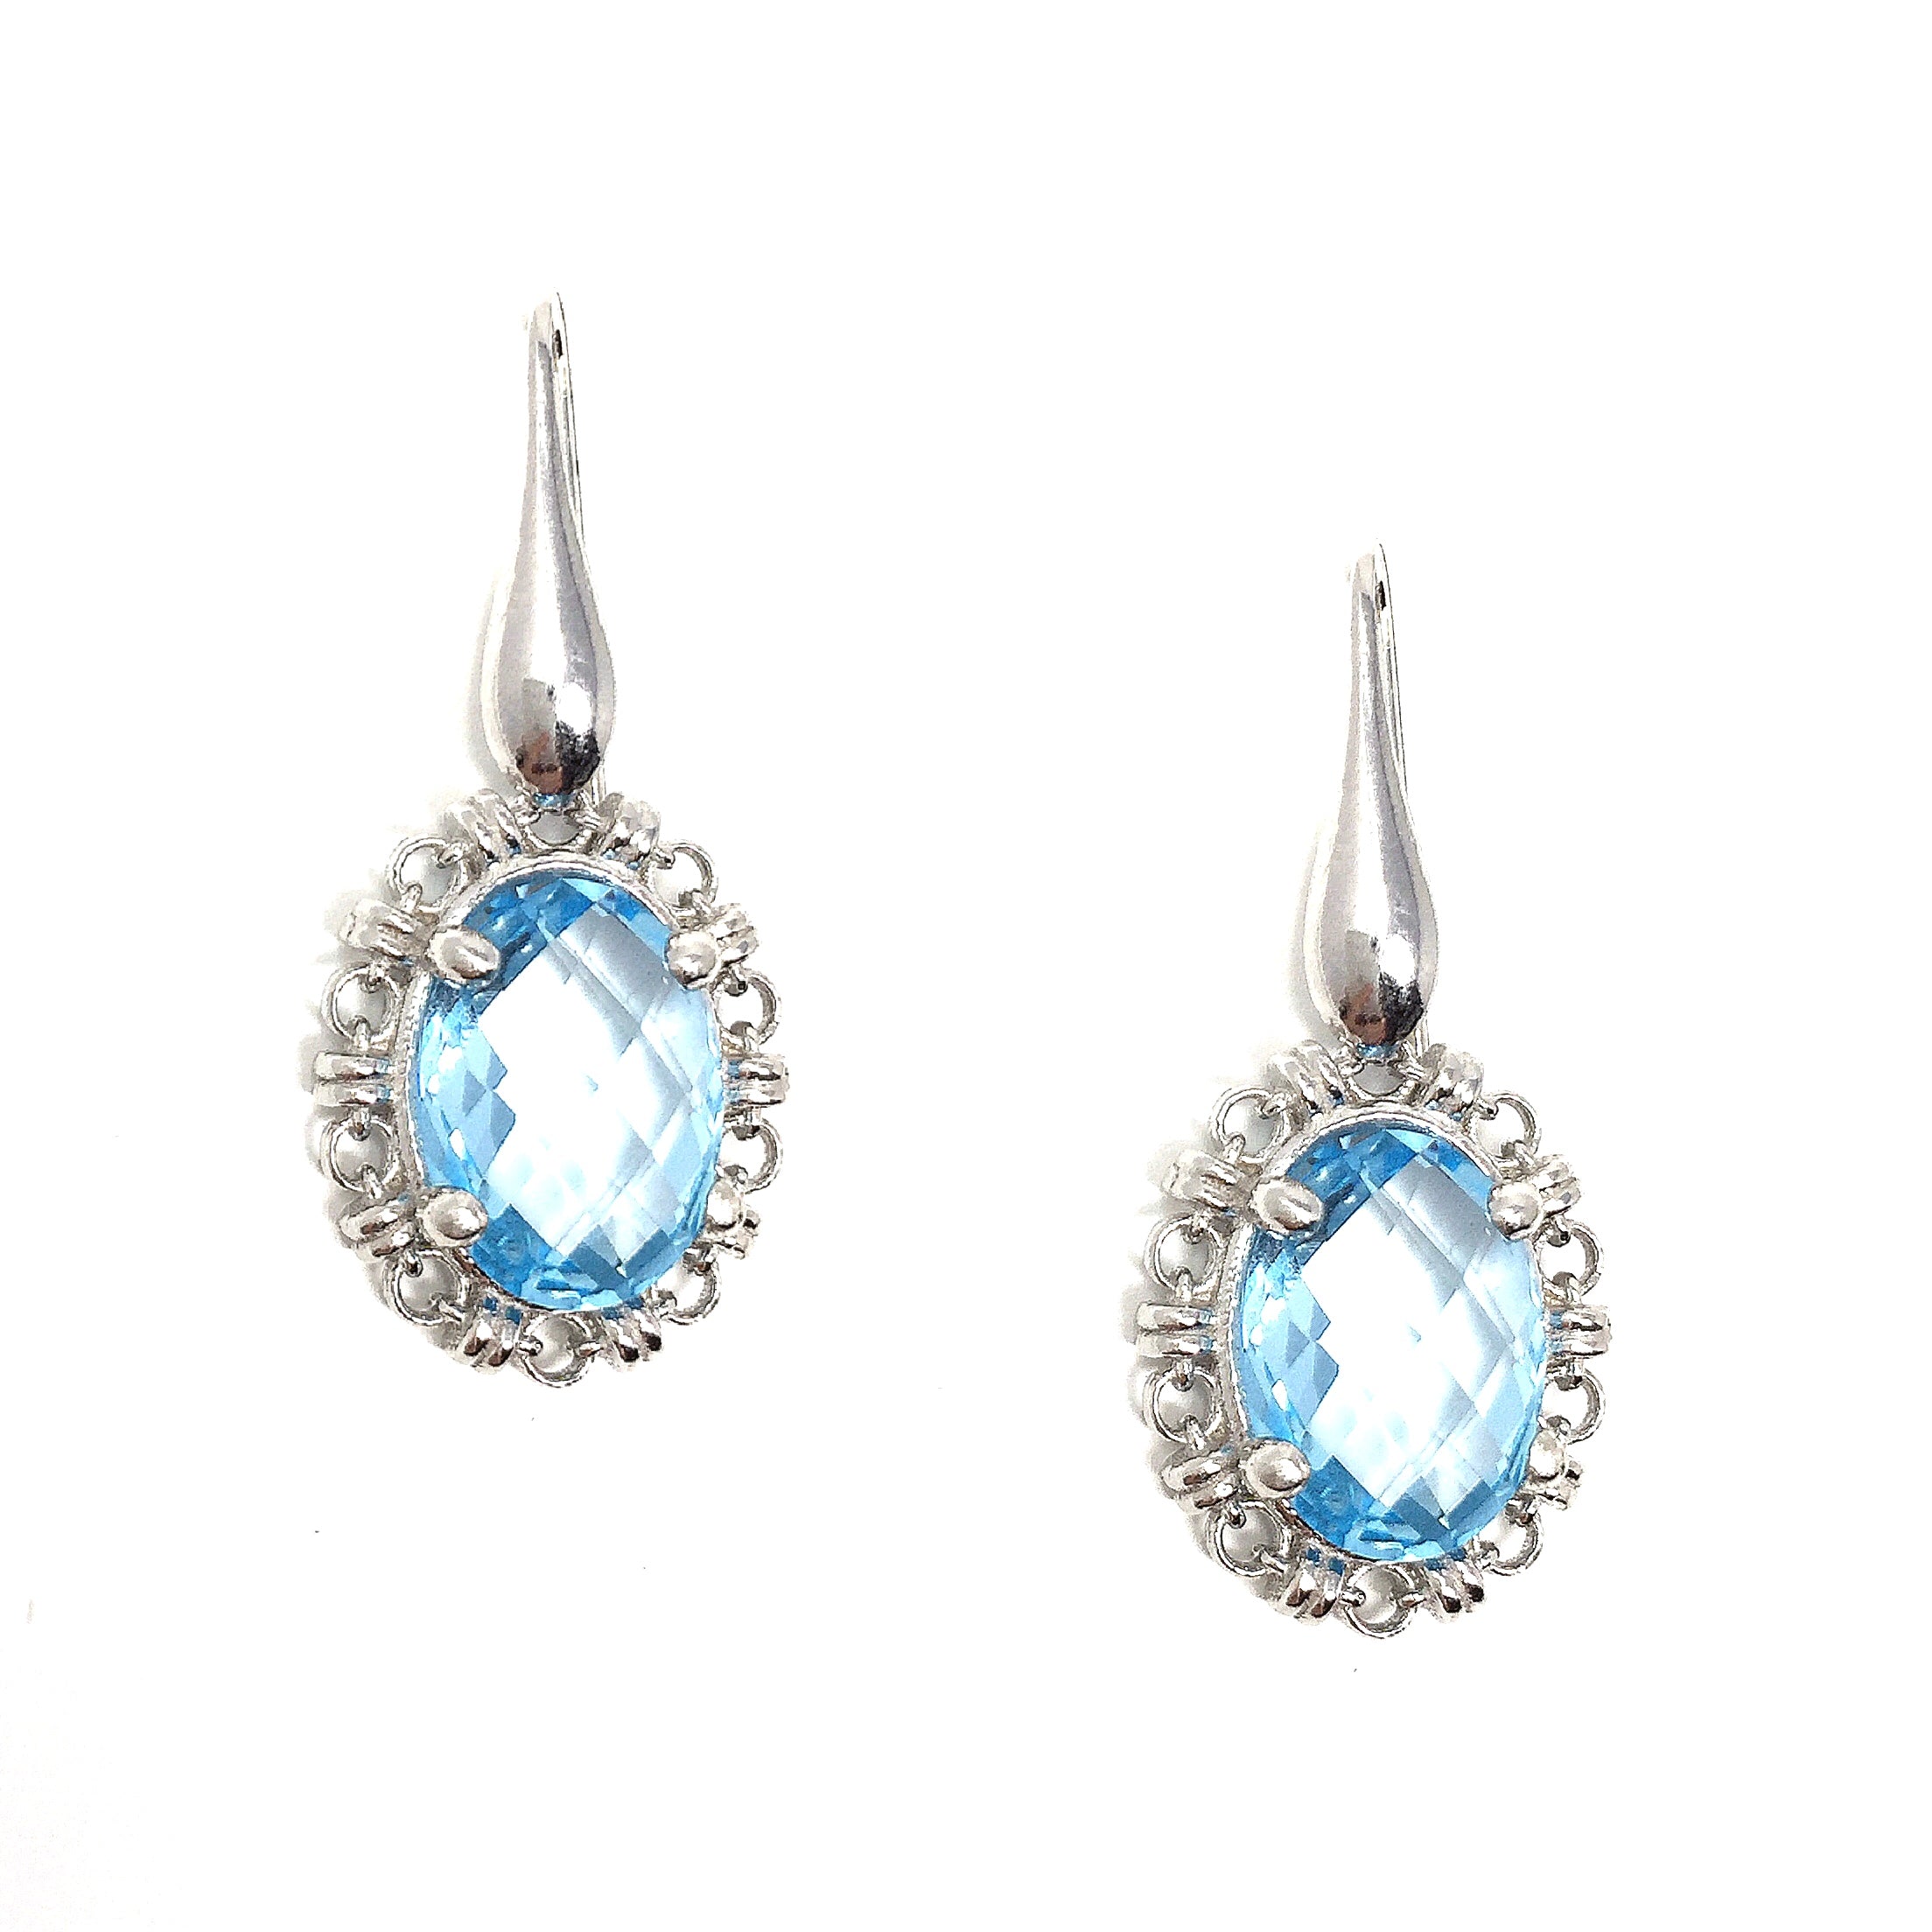 Aperitivo Earrings in Silver with Blue Topaz